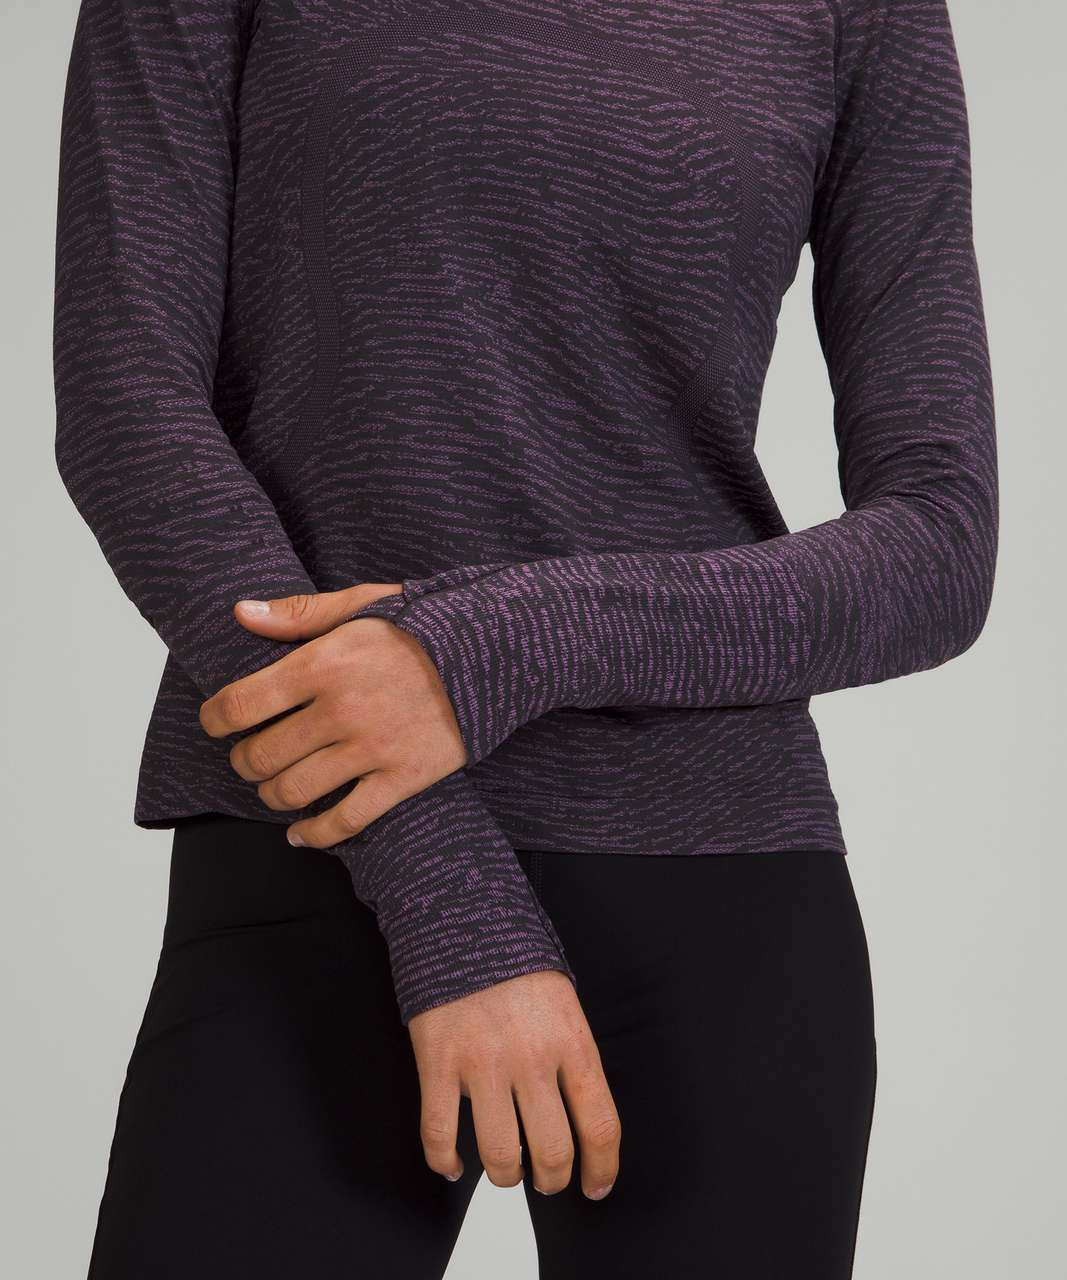 Lululemon Swiftly Tech Long Sleeve Shirt 2.0 *Race Length - Water Surface Black Granite / Wisteria Purple